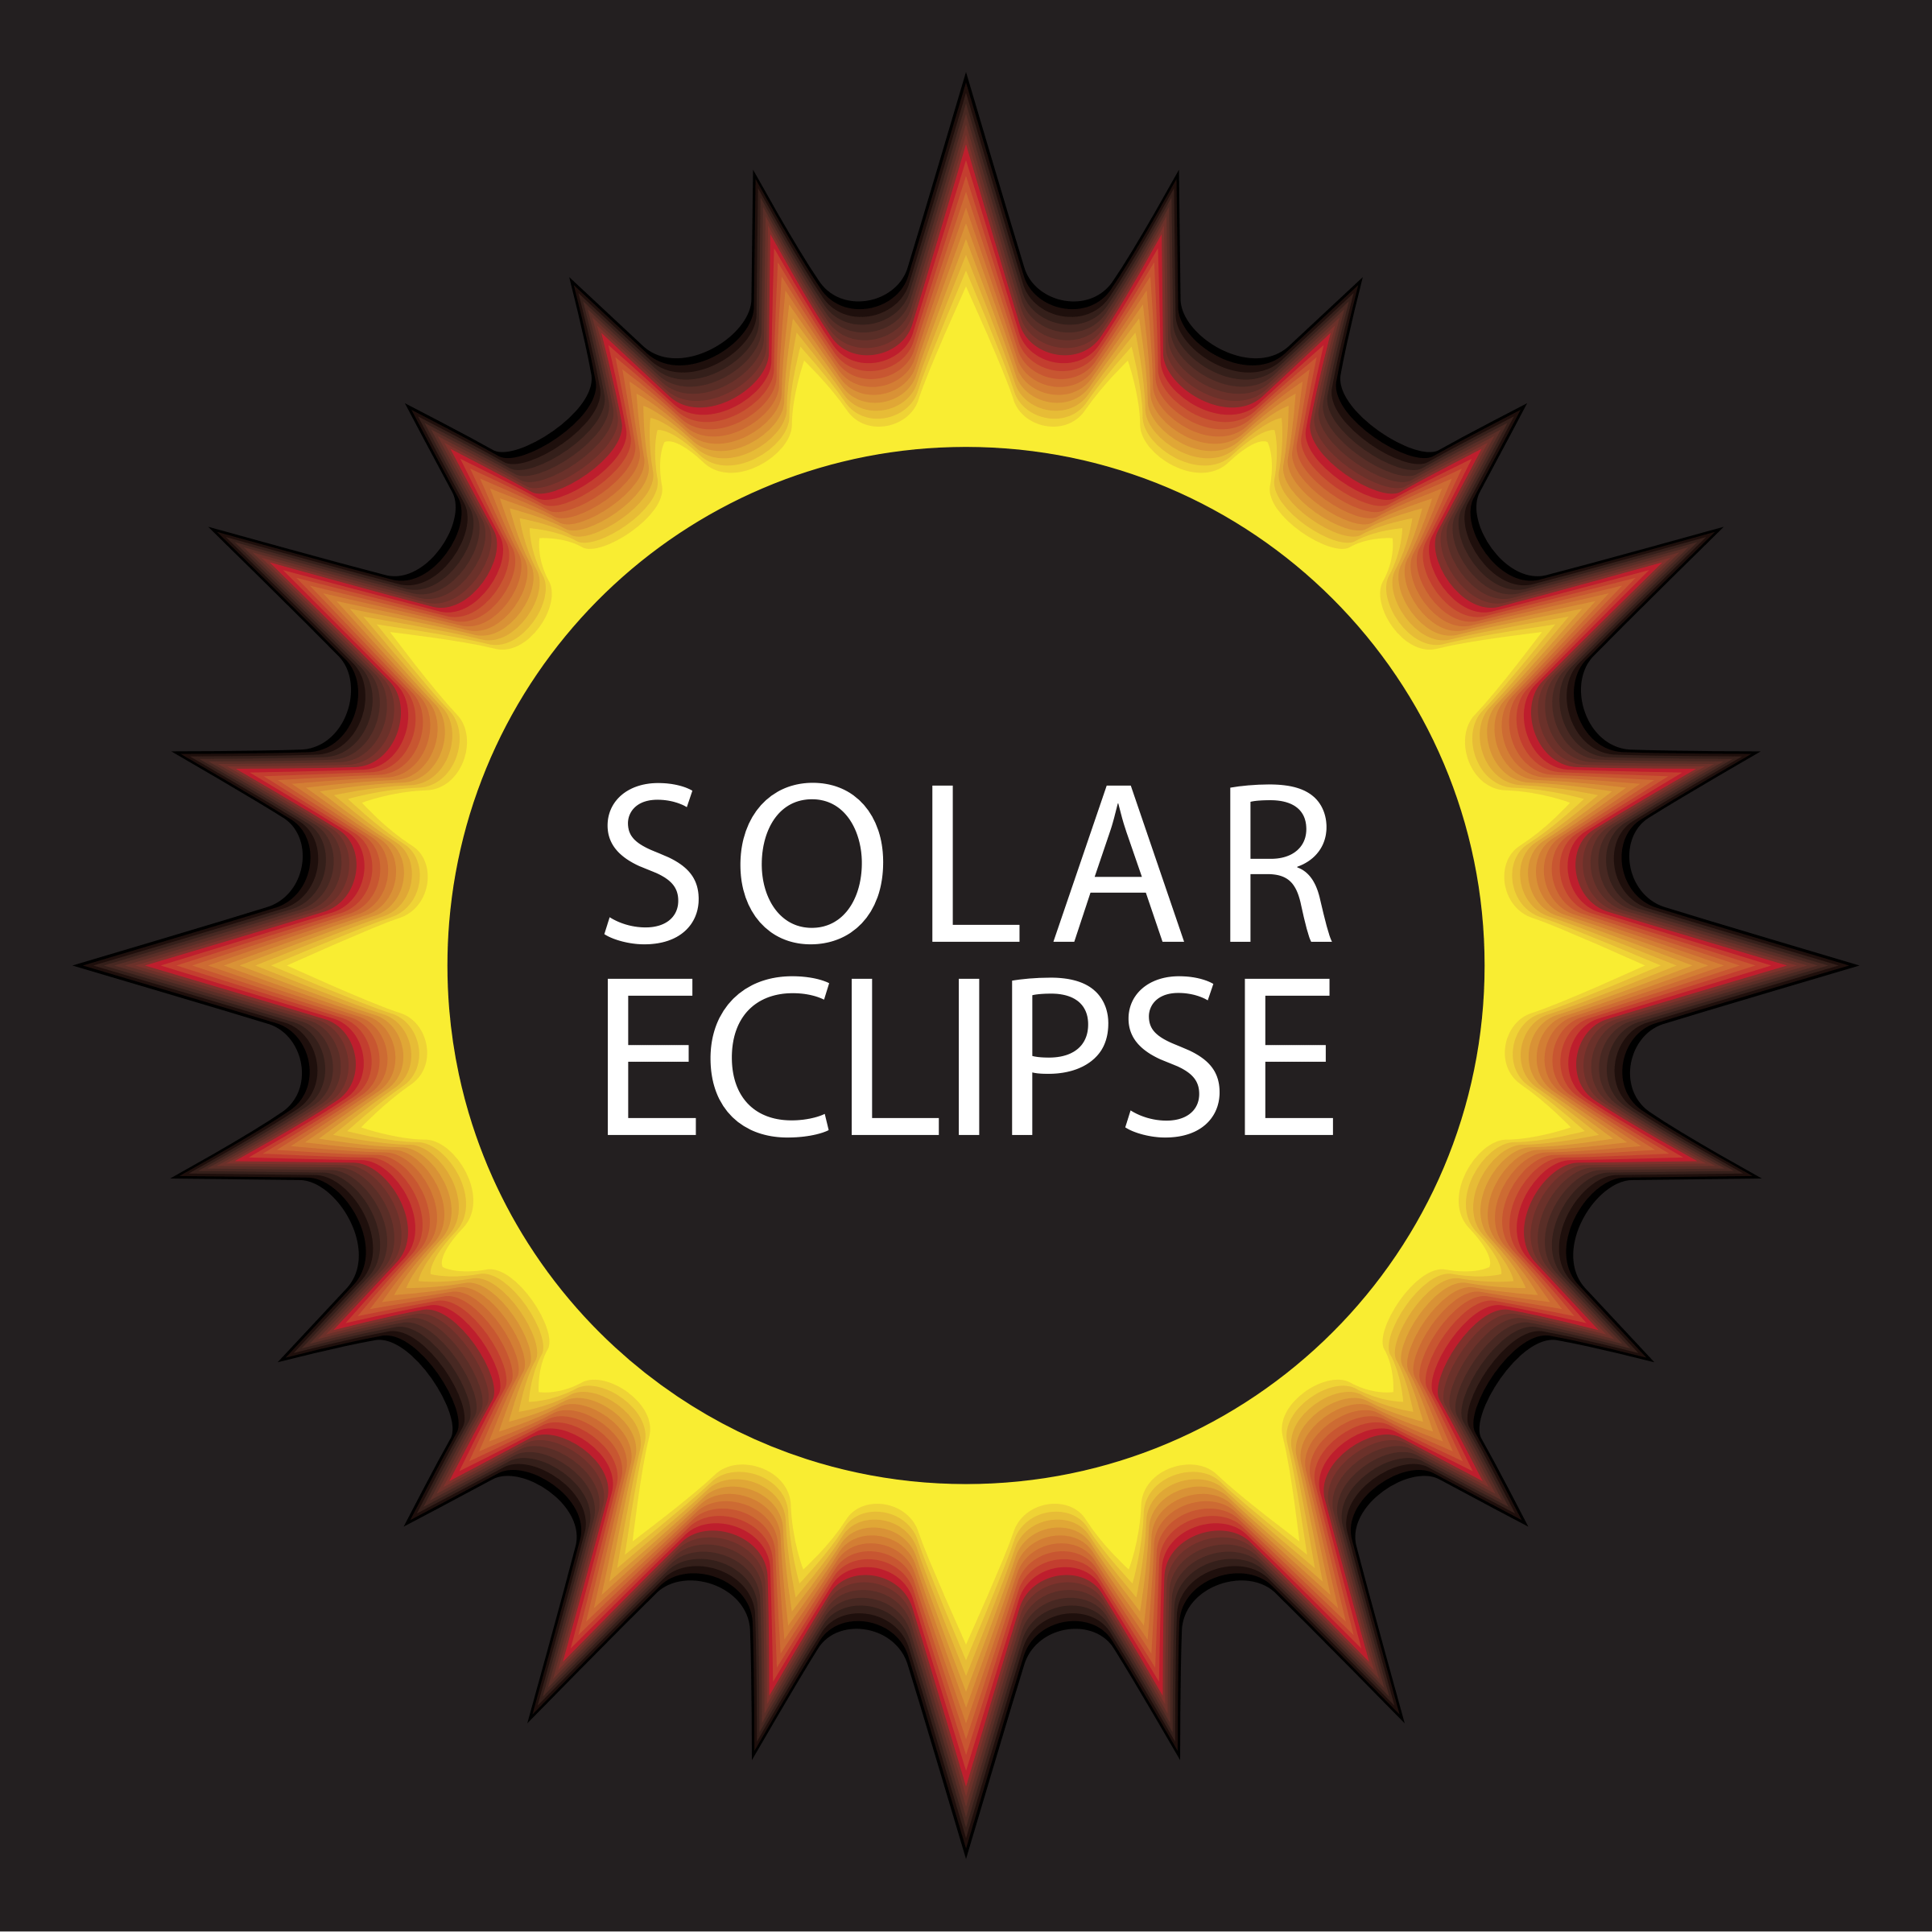 Eclipse Wallpaper Free Download